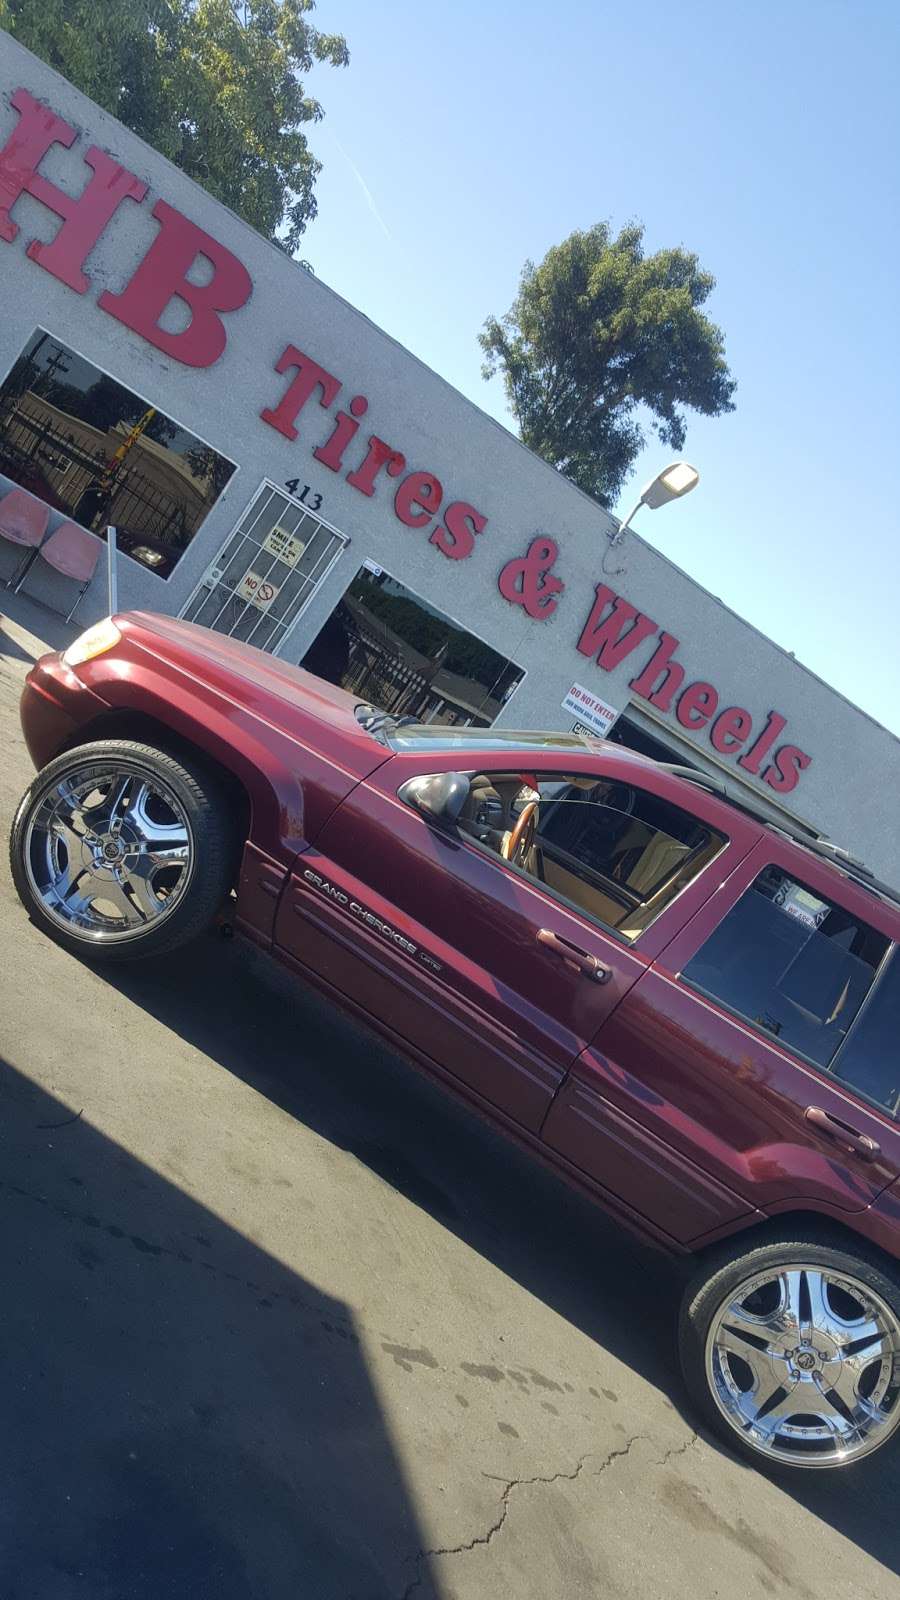 HB Tires & Wheels | 413 N Wilmington Ave, Compton, CA 90220, USA | Phone: (310) 627-9311